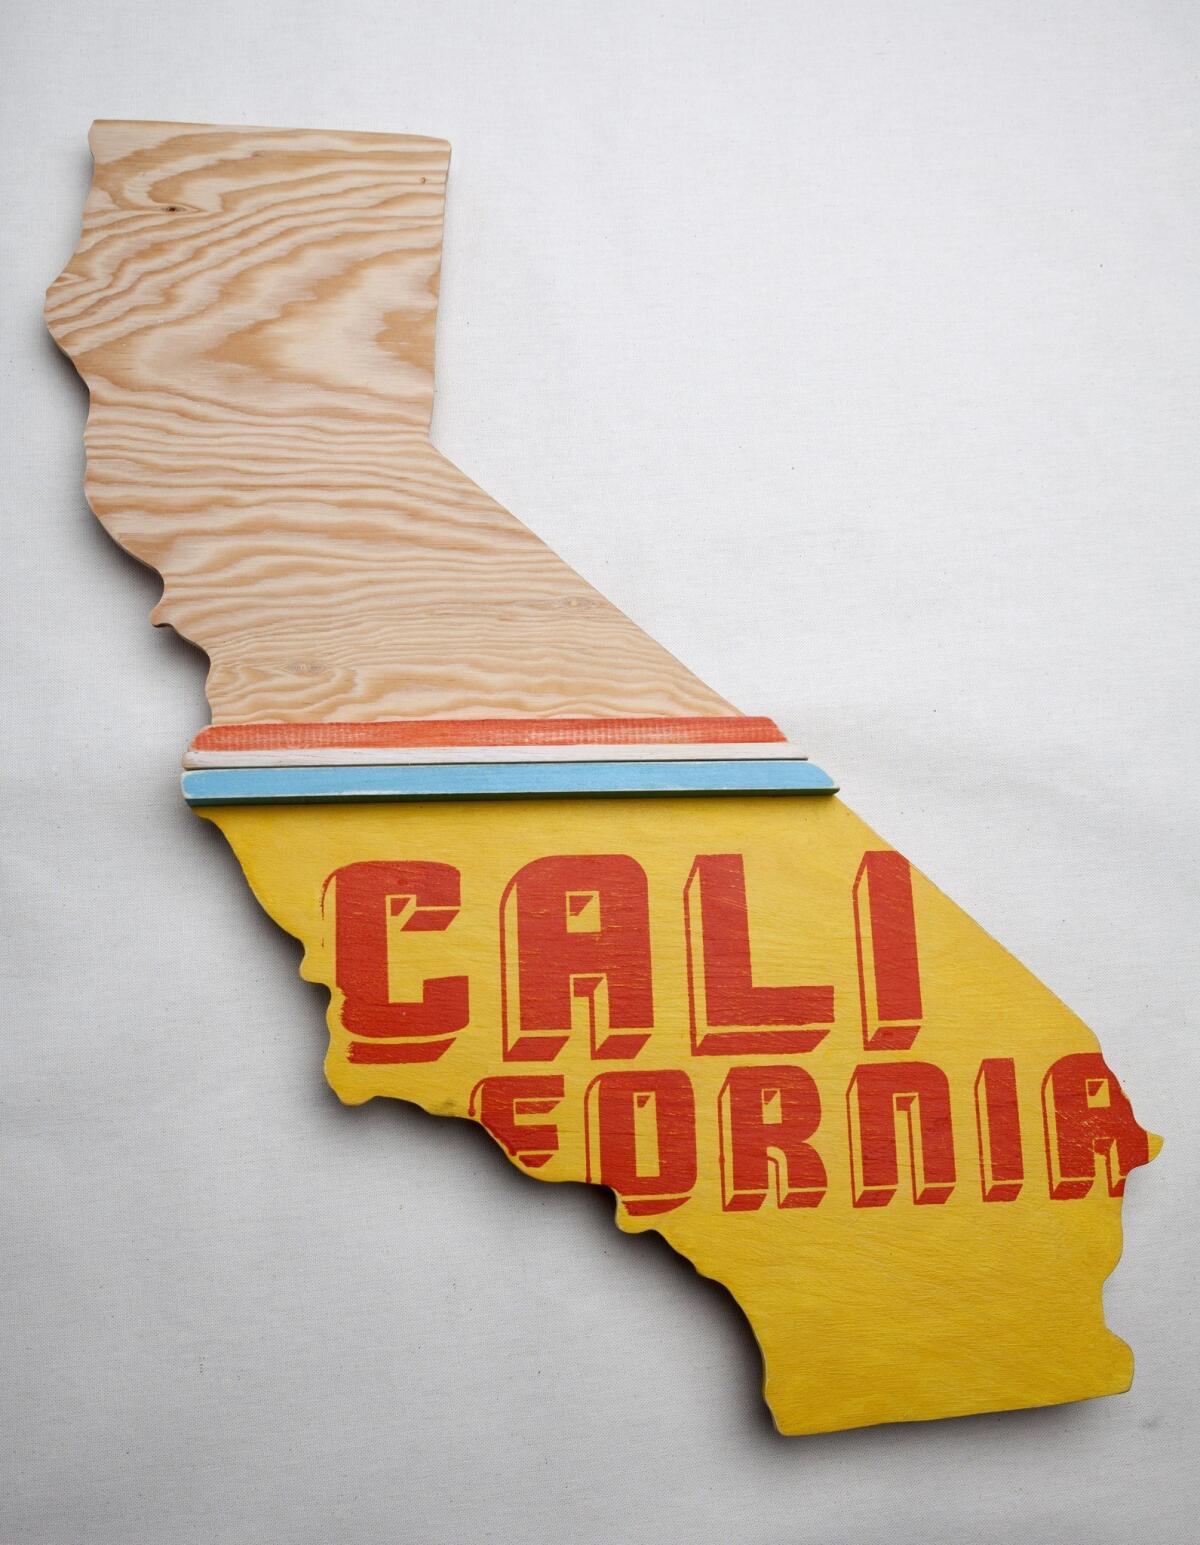 A jigsaw state map of California by 33 Stewart Avenue.